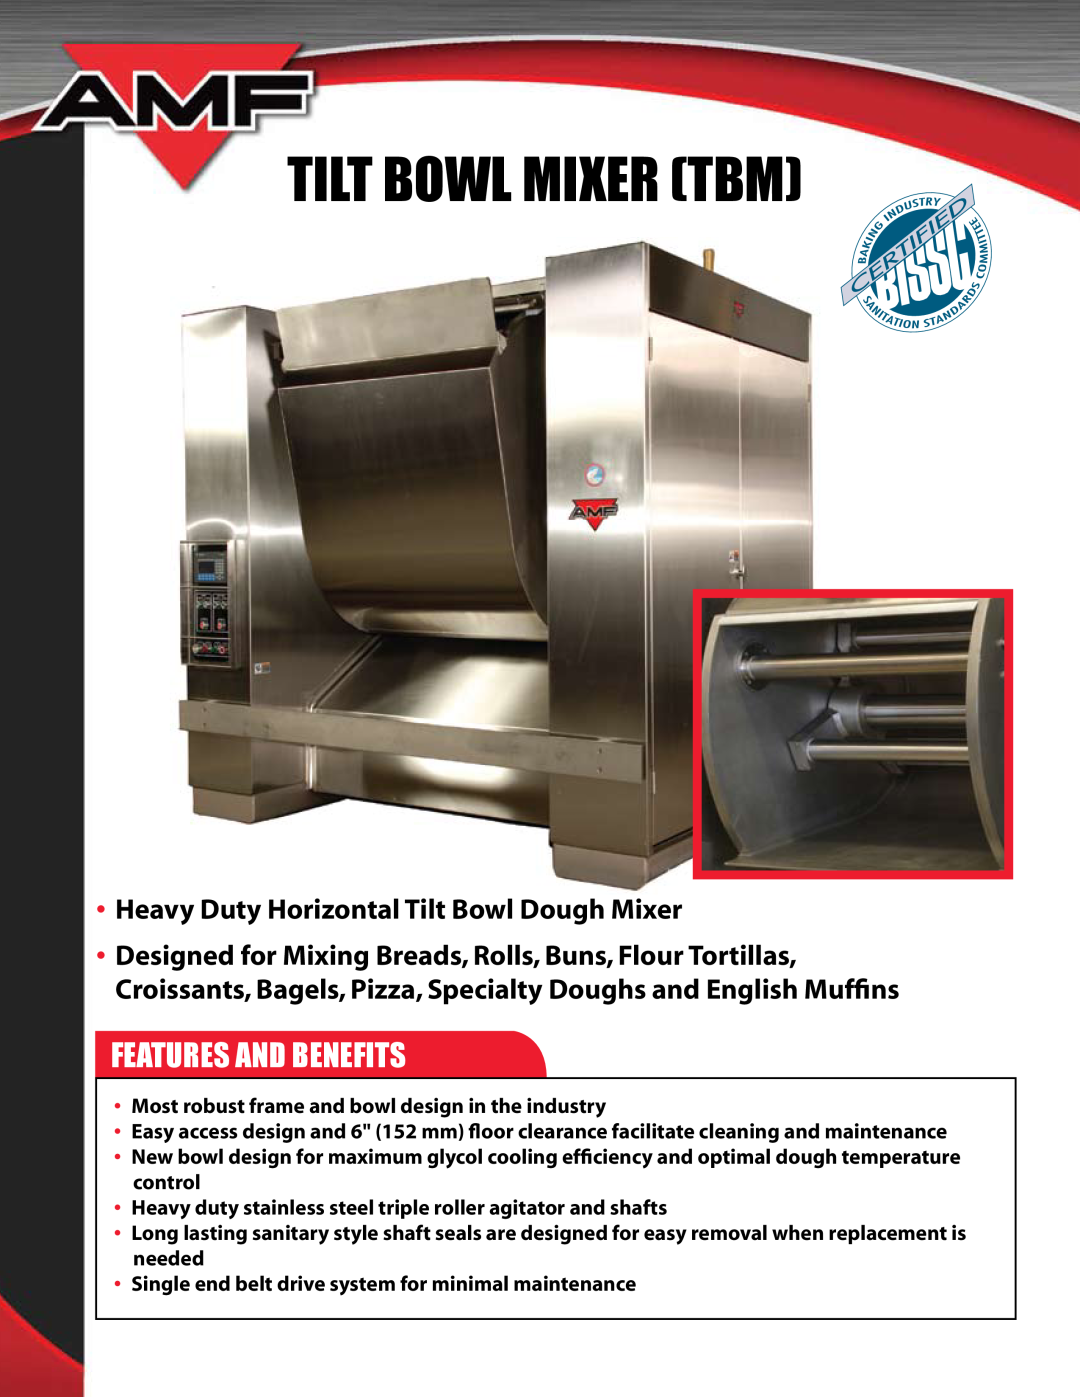 AMF TILT Bowl Mixer (TBM) manual Features And Benefits, Tilt Bowl Mixer Tbm, Heavy Duty Horizontal Tilt Bowl Dough Mixer 